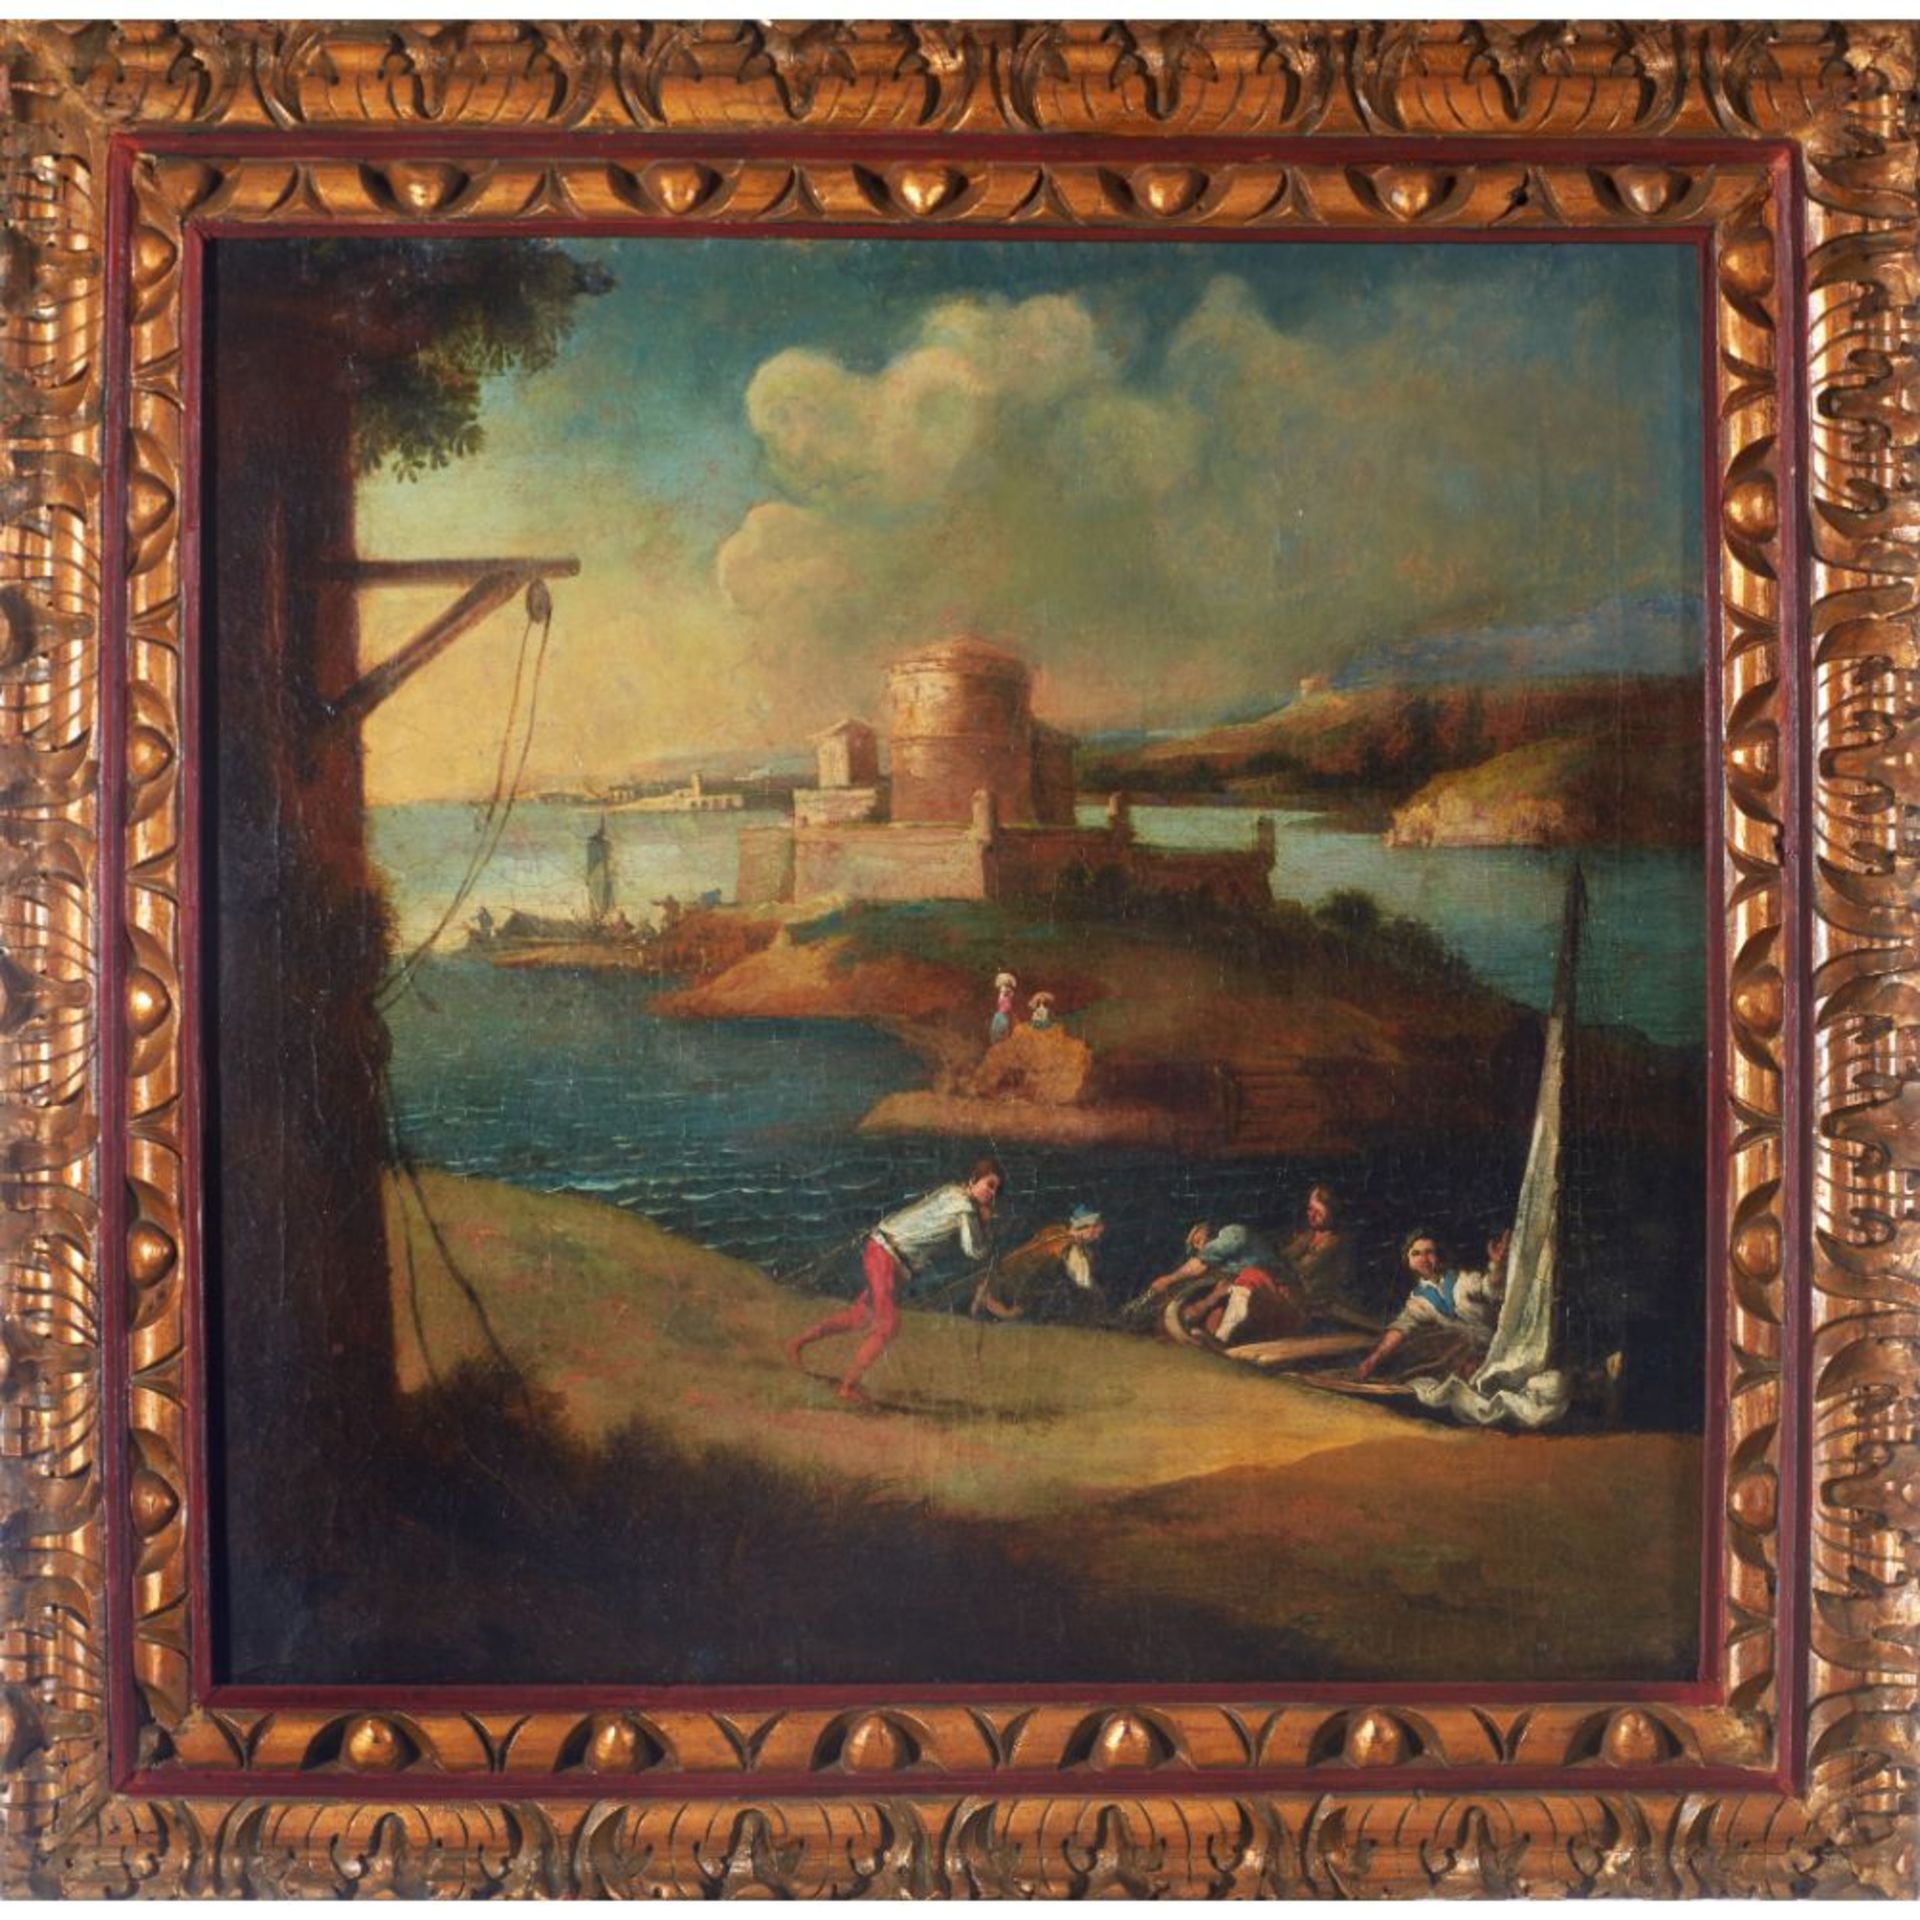 Neapolitan School, 18th / 19th century, Landscape, Oil on canvas, 79,5x83 cm